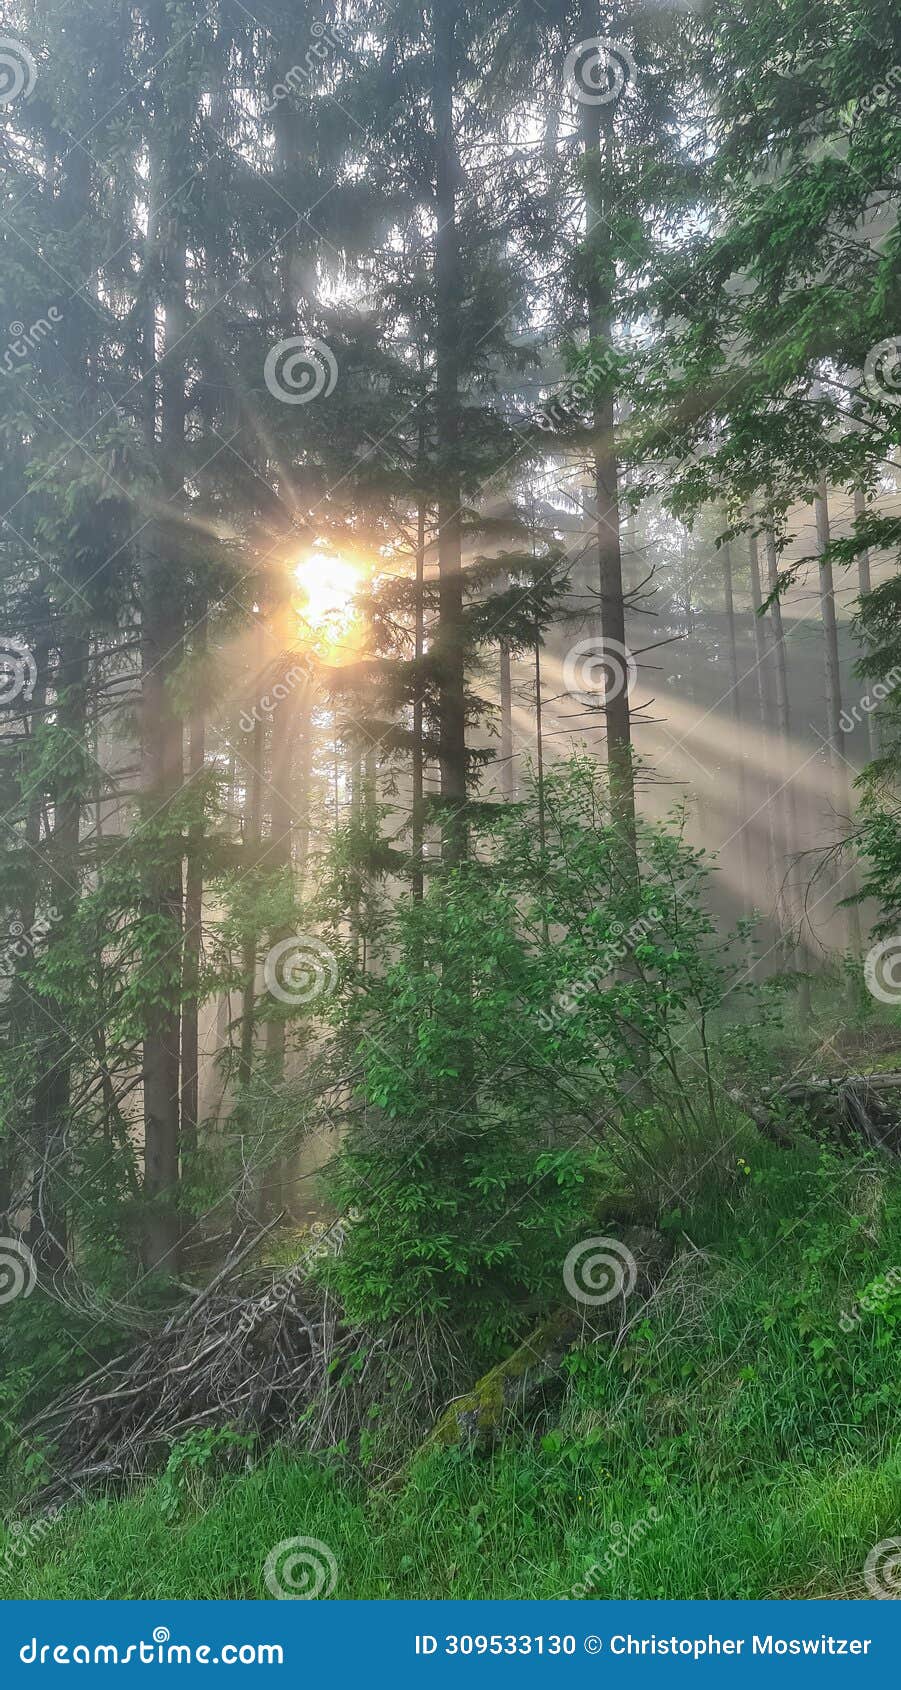 petzen - morning vibes of sun rays shinning through dense forest in carinthia, austria